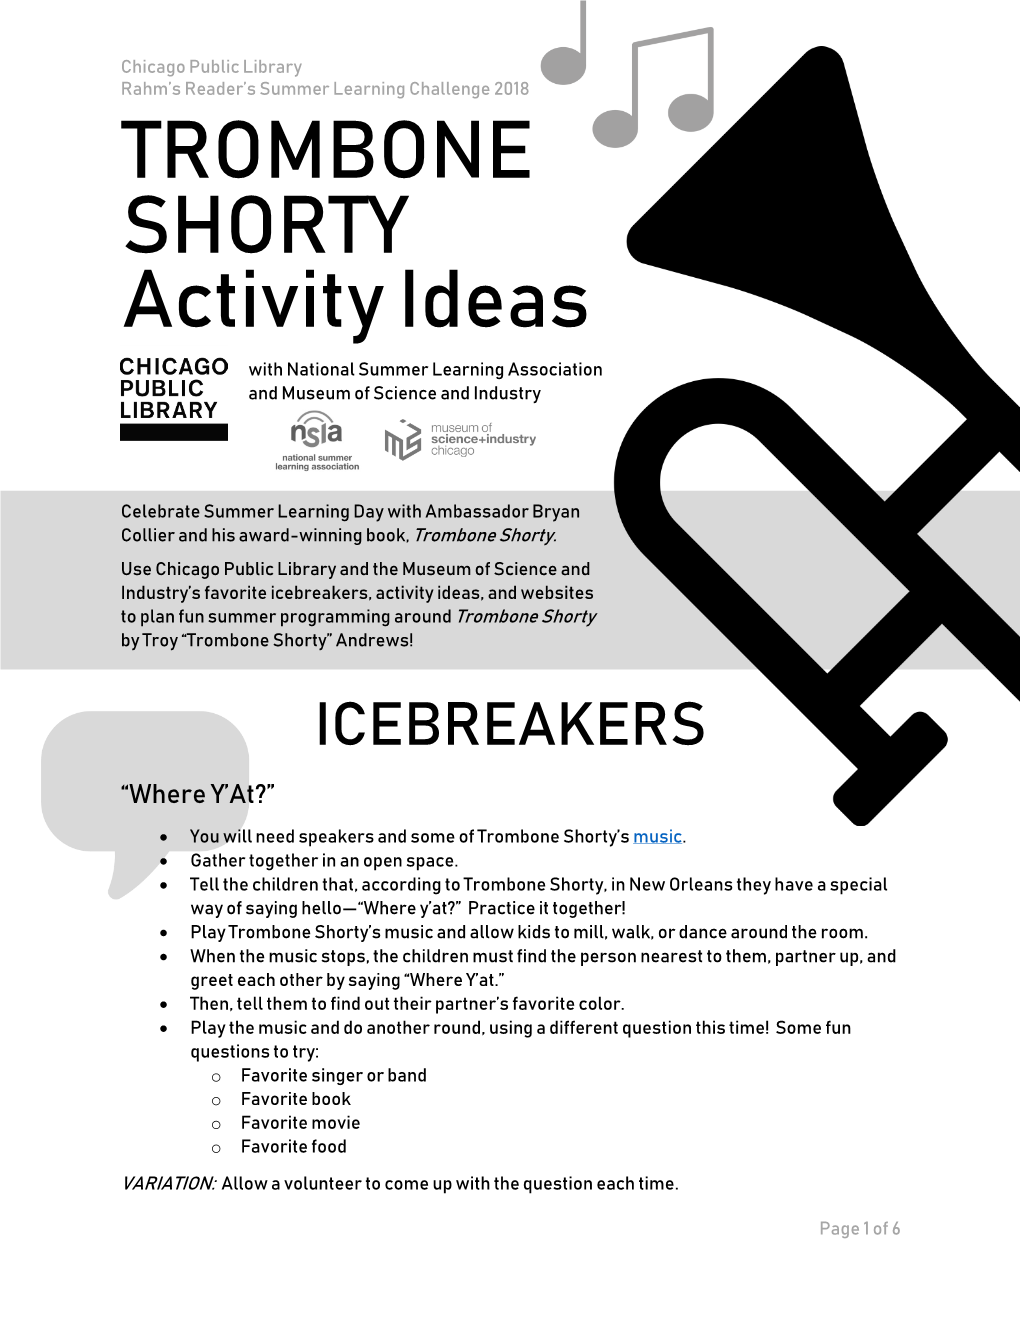 Trombone Shorty Activity Ideas